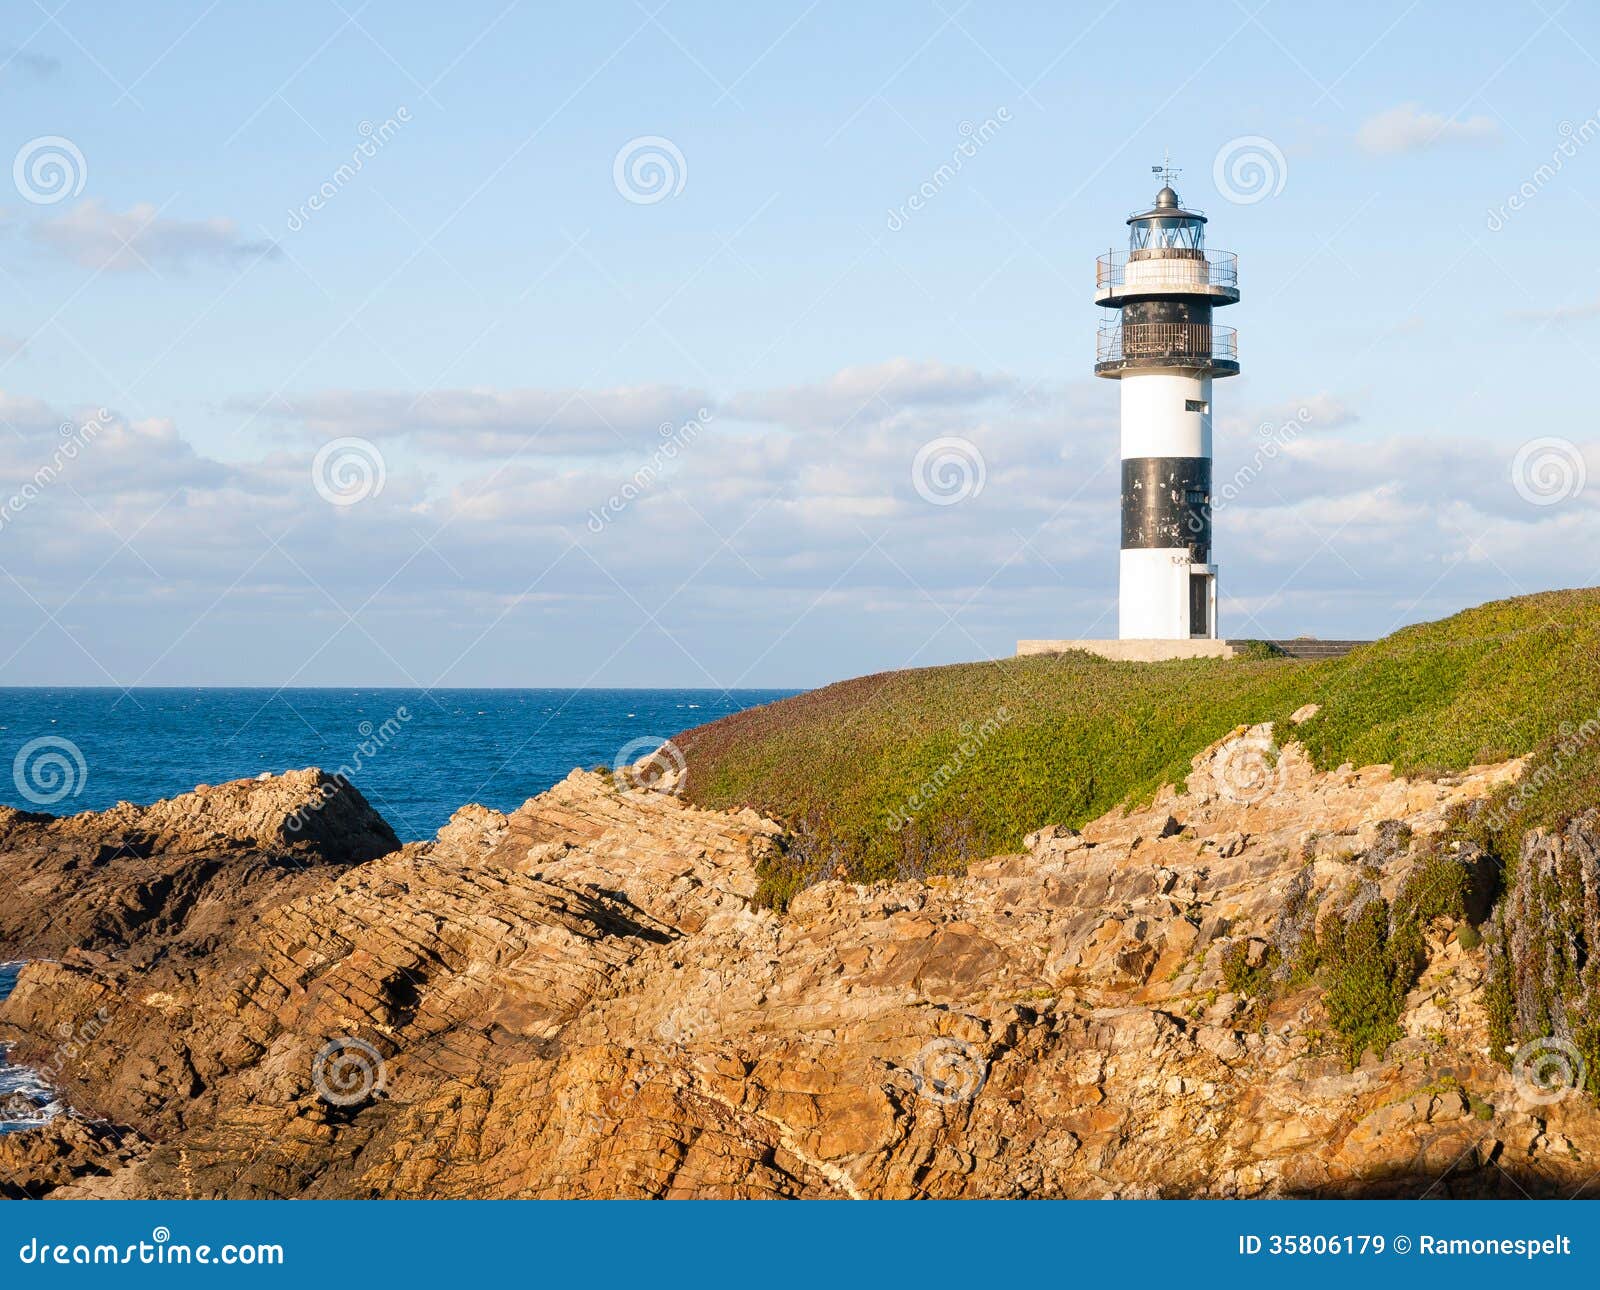 lighthouse in illa pancha, lugo, galicia, spain.